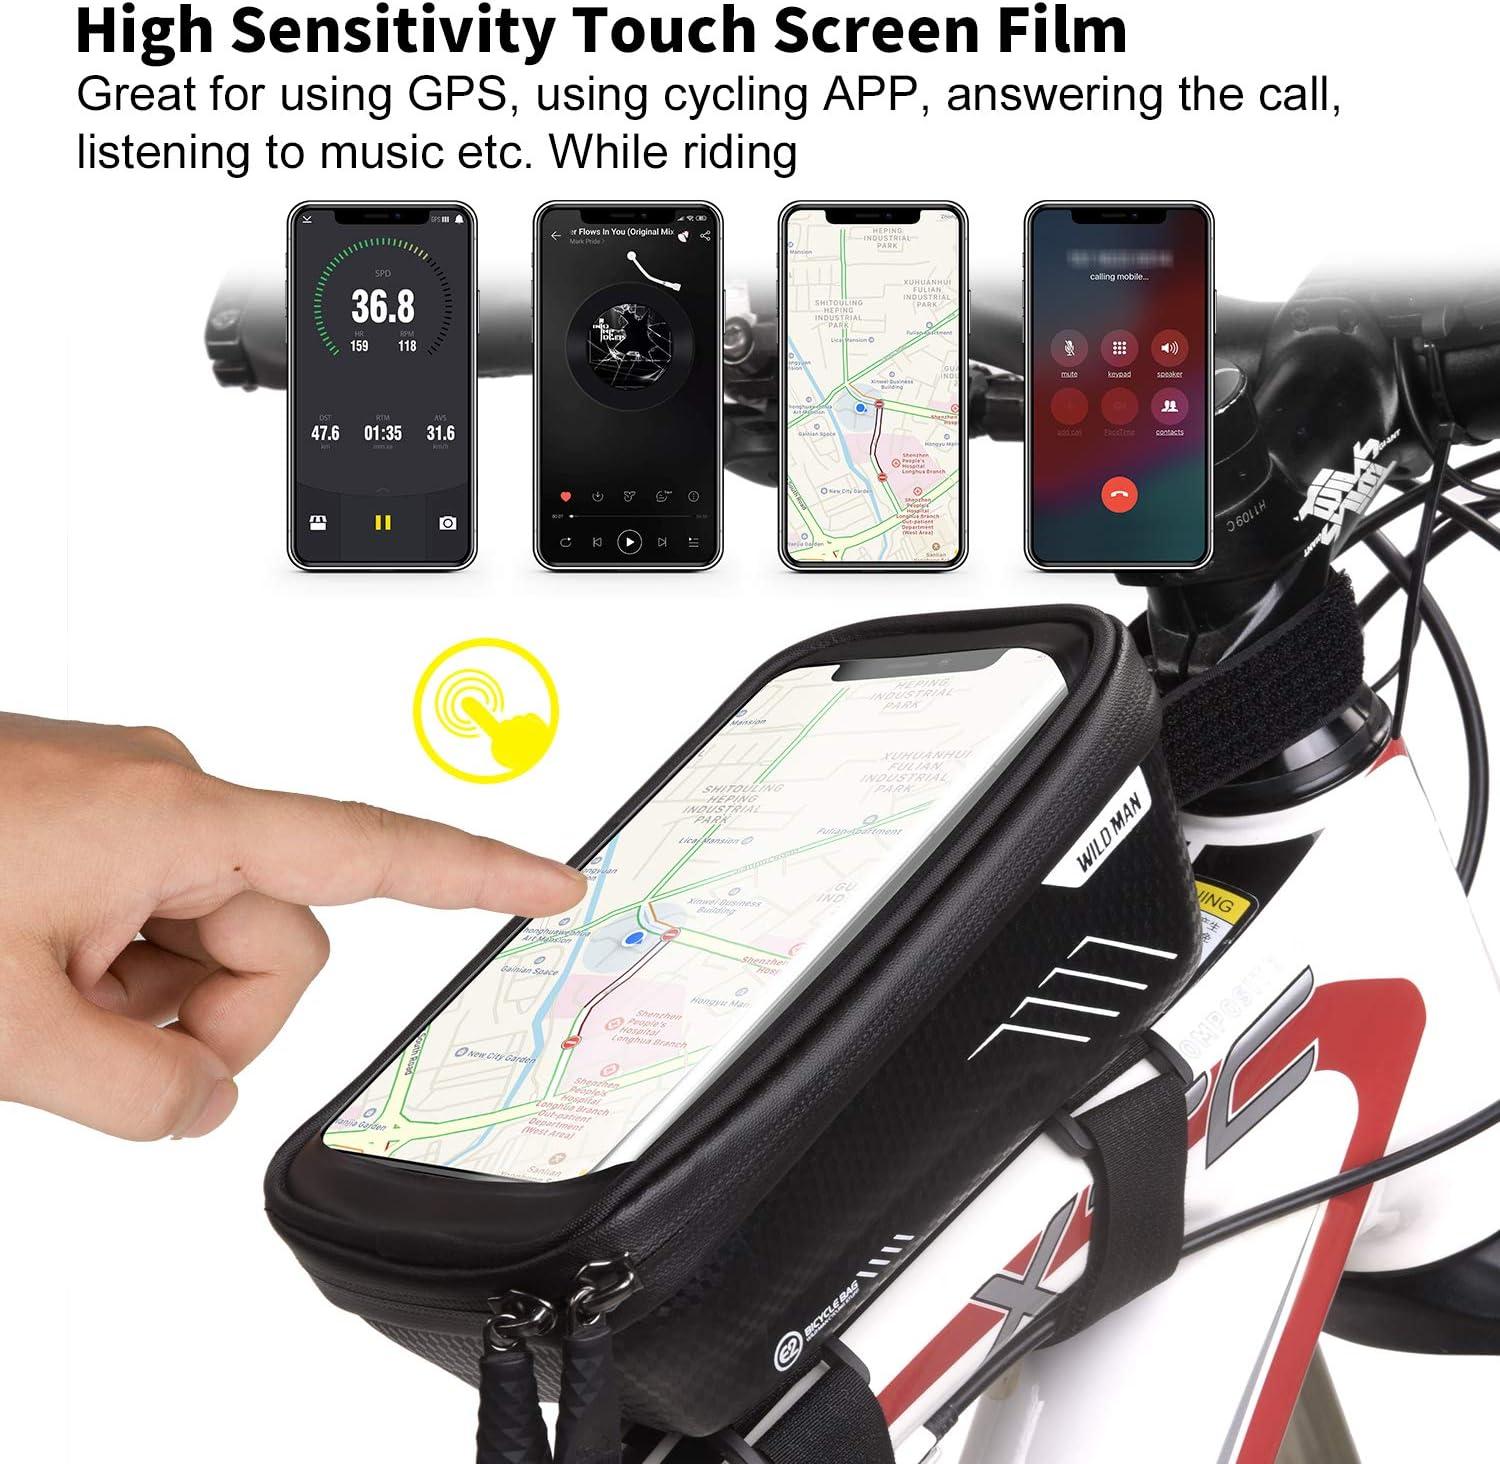 bike accessories phone holder and bag